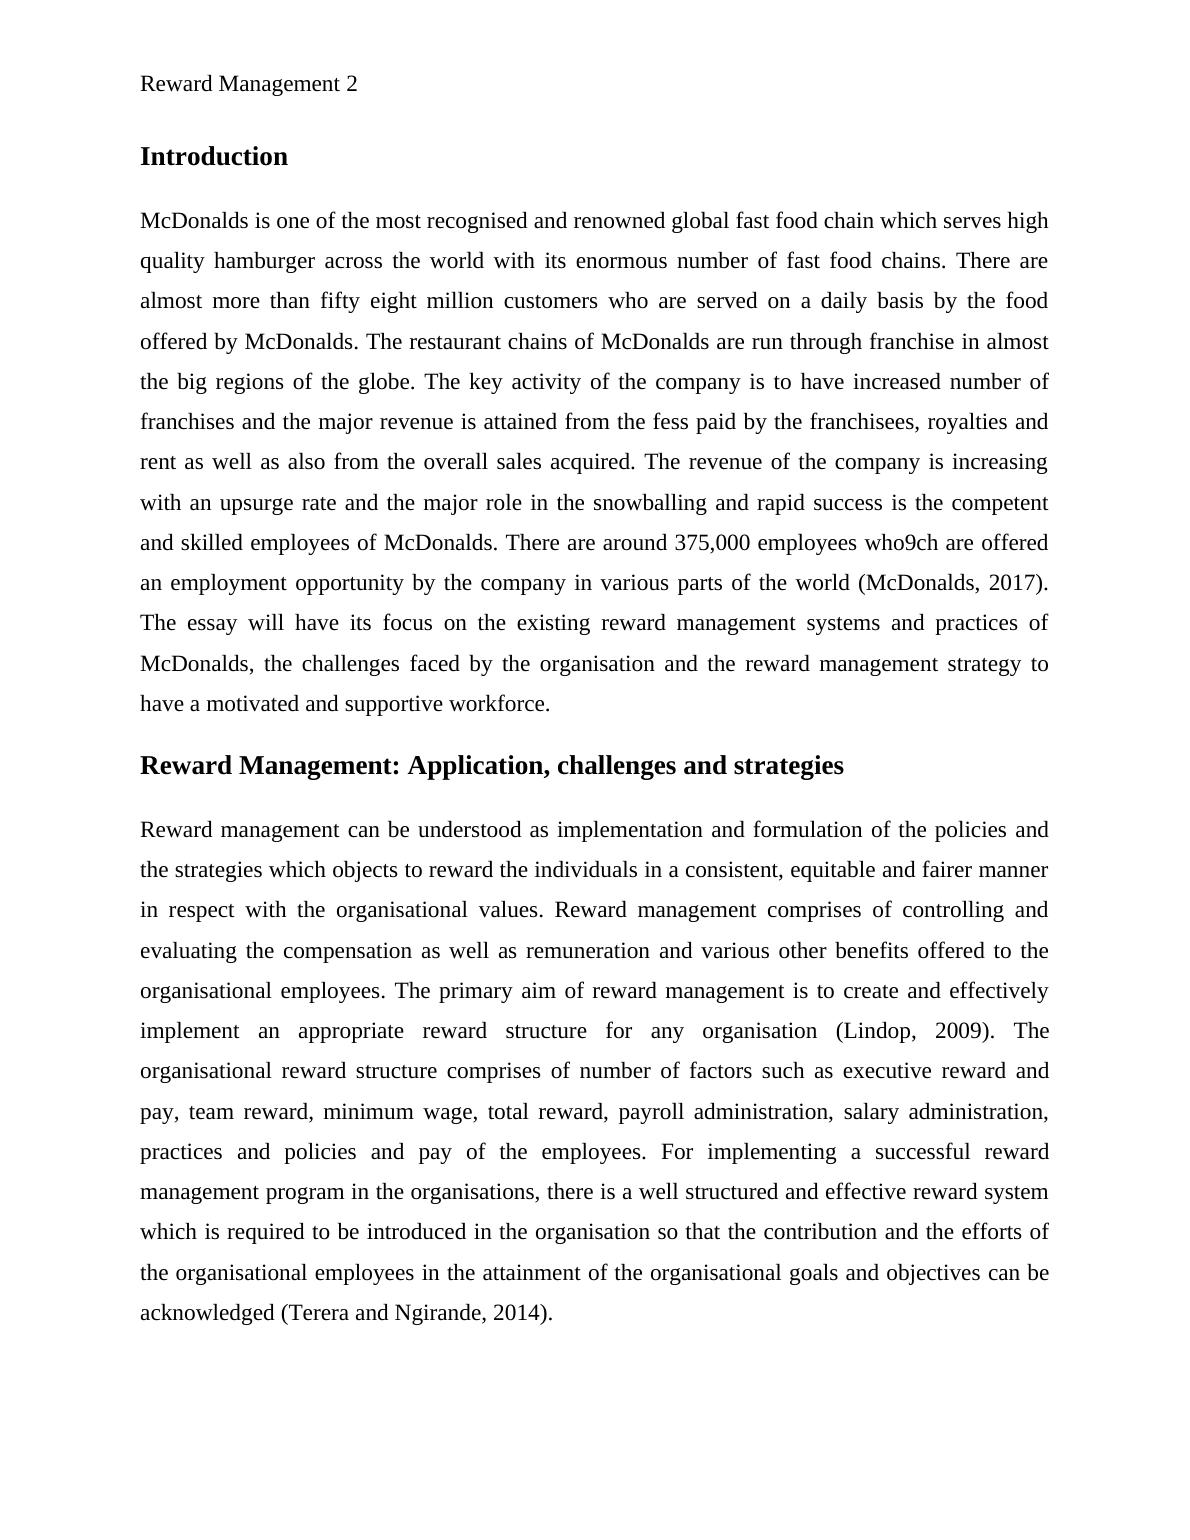 Reward Management Assignment - McDonalds_2